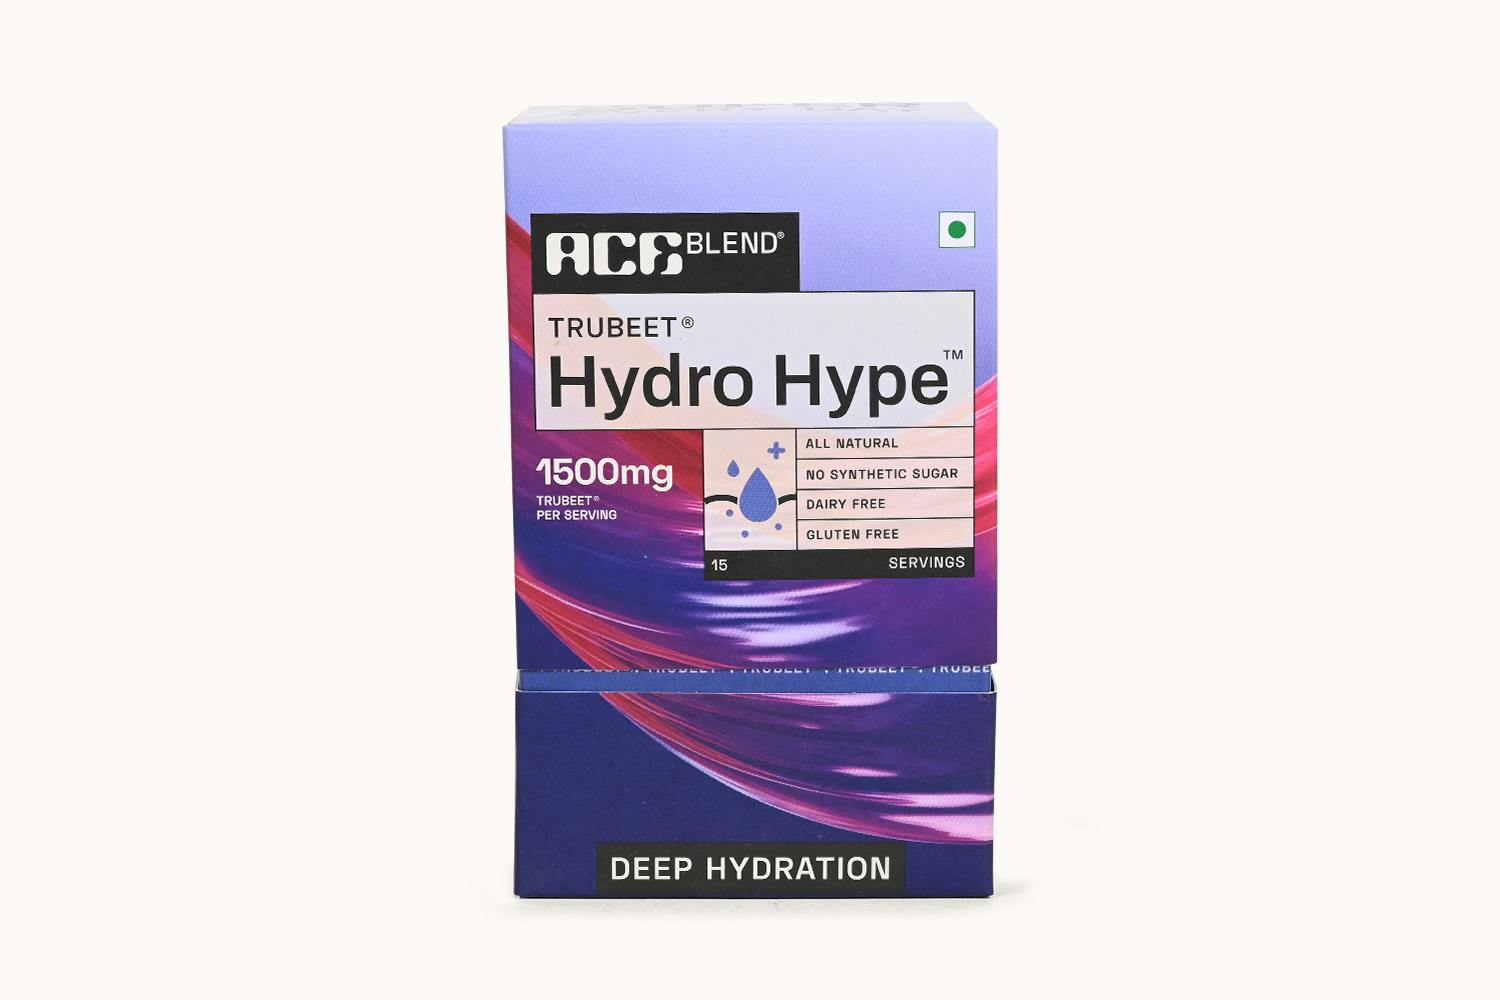 Ace Blend Trubeet Hydro Hype